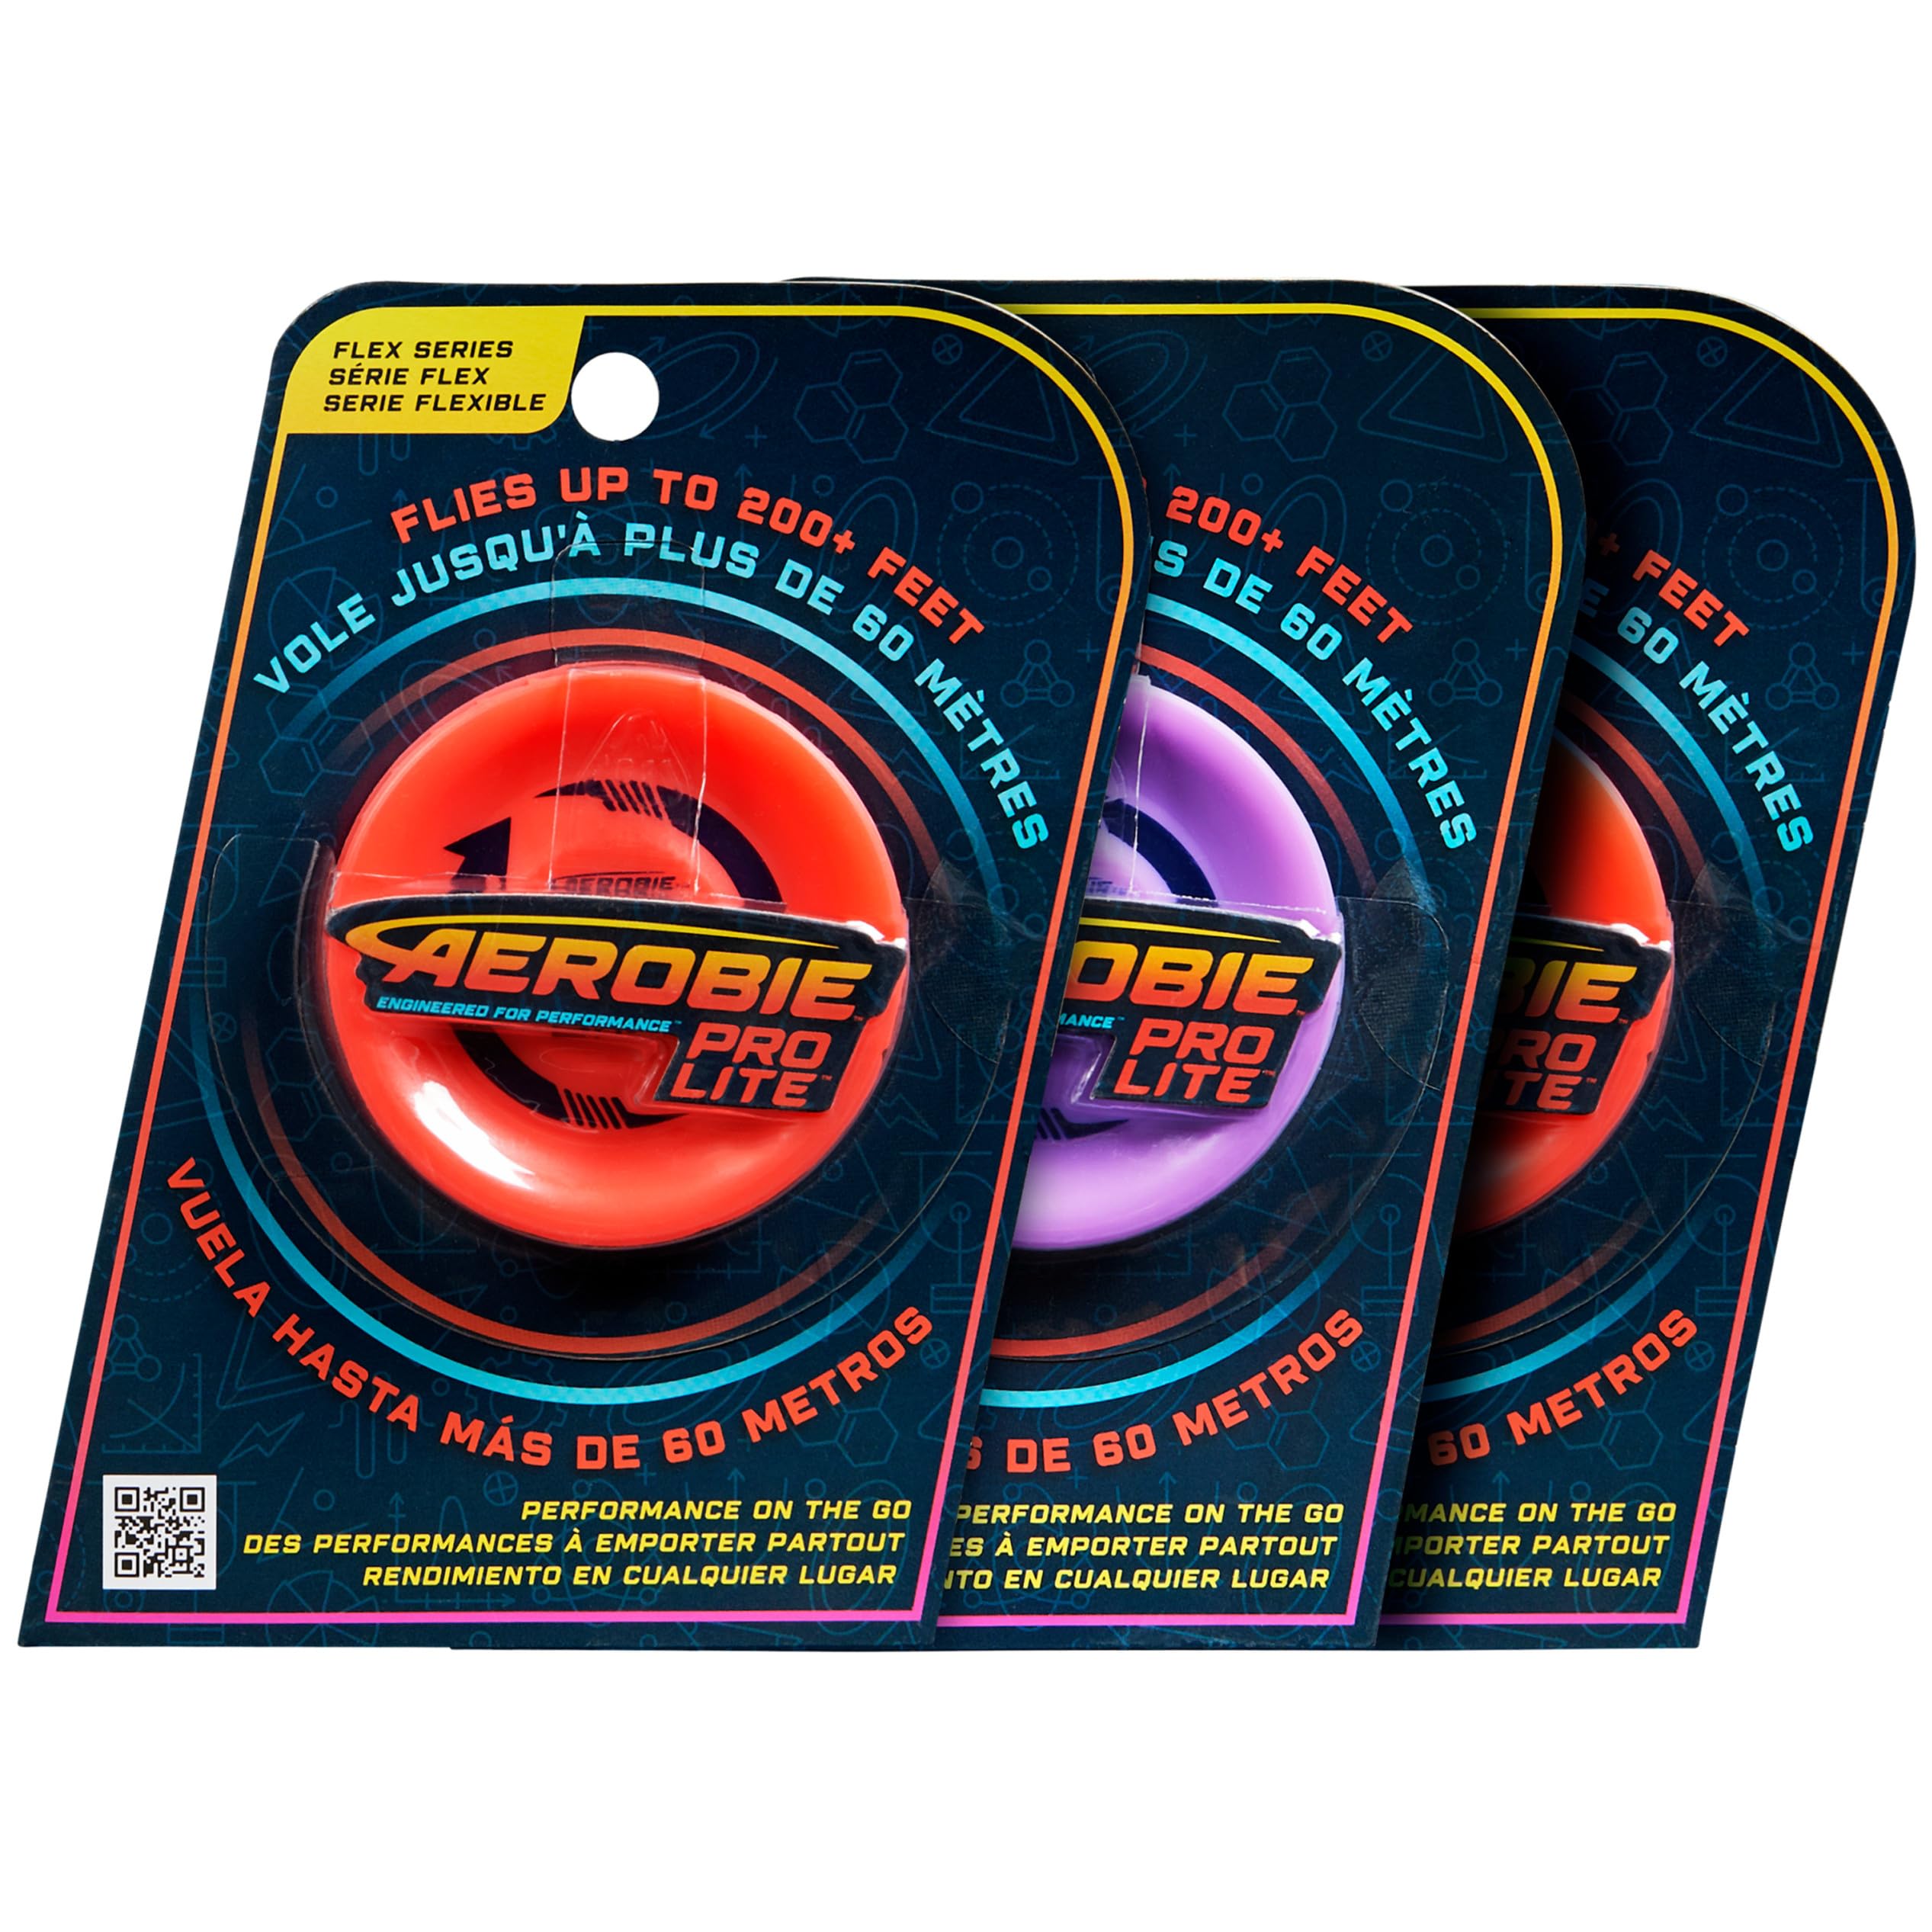 3-Count Aerobie Pro Lite Mini Throwing Discs $5.91 ($1.97 each) + Free Shipping w/ Prime or on $35+